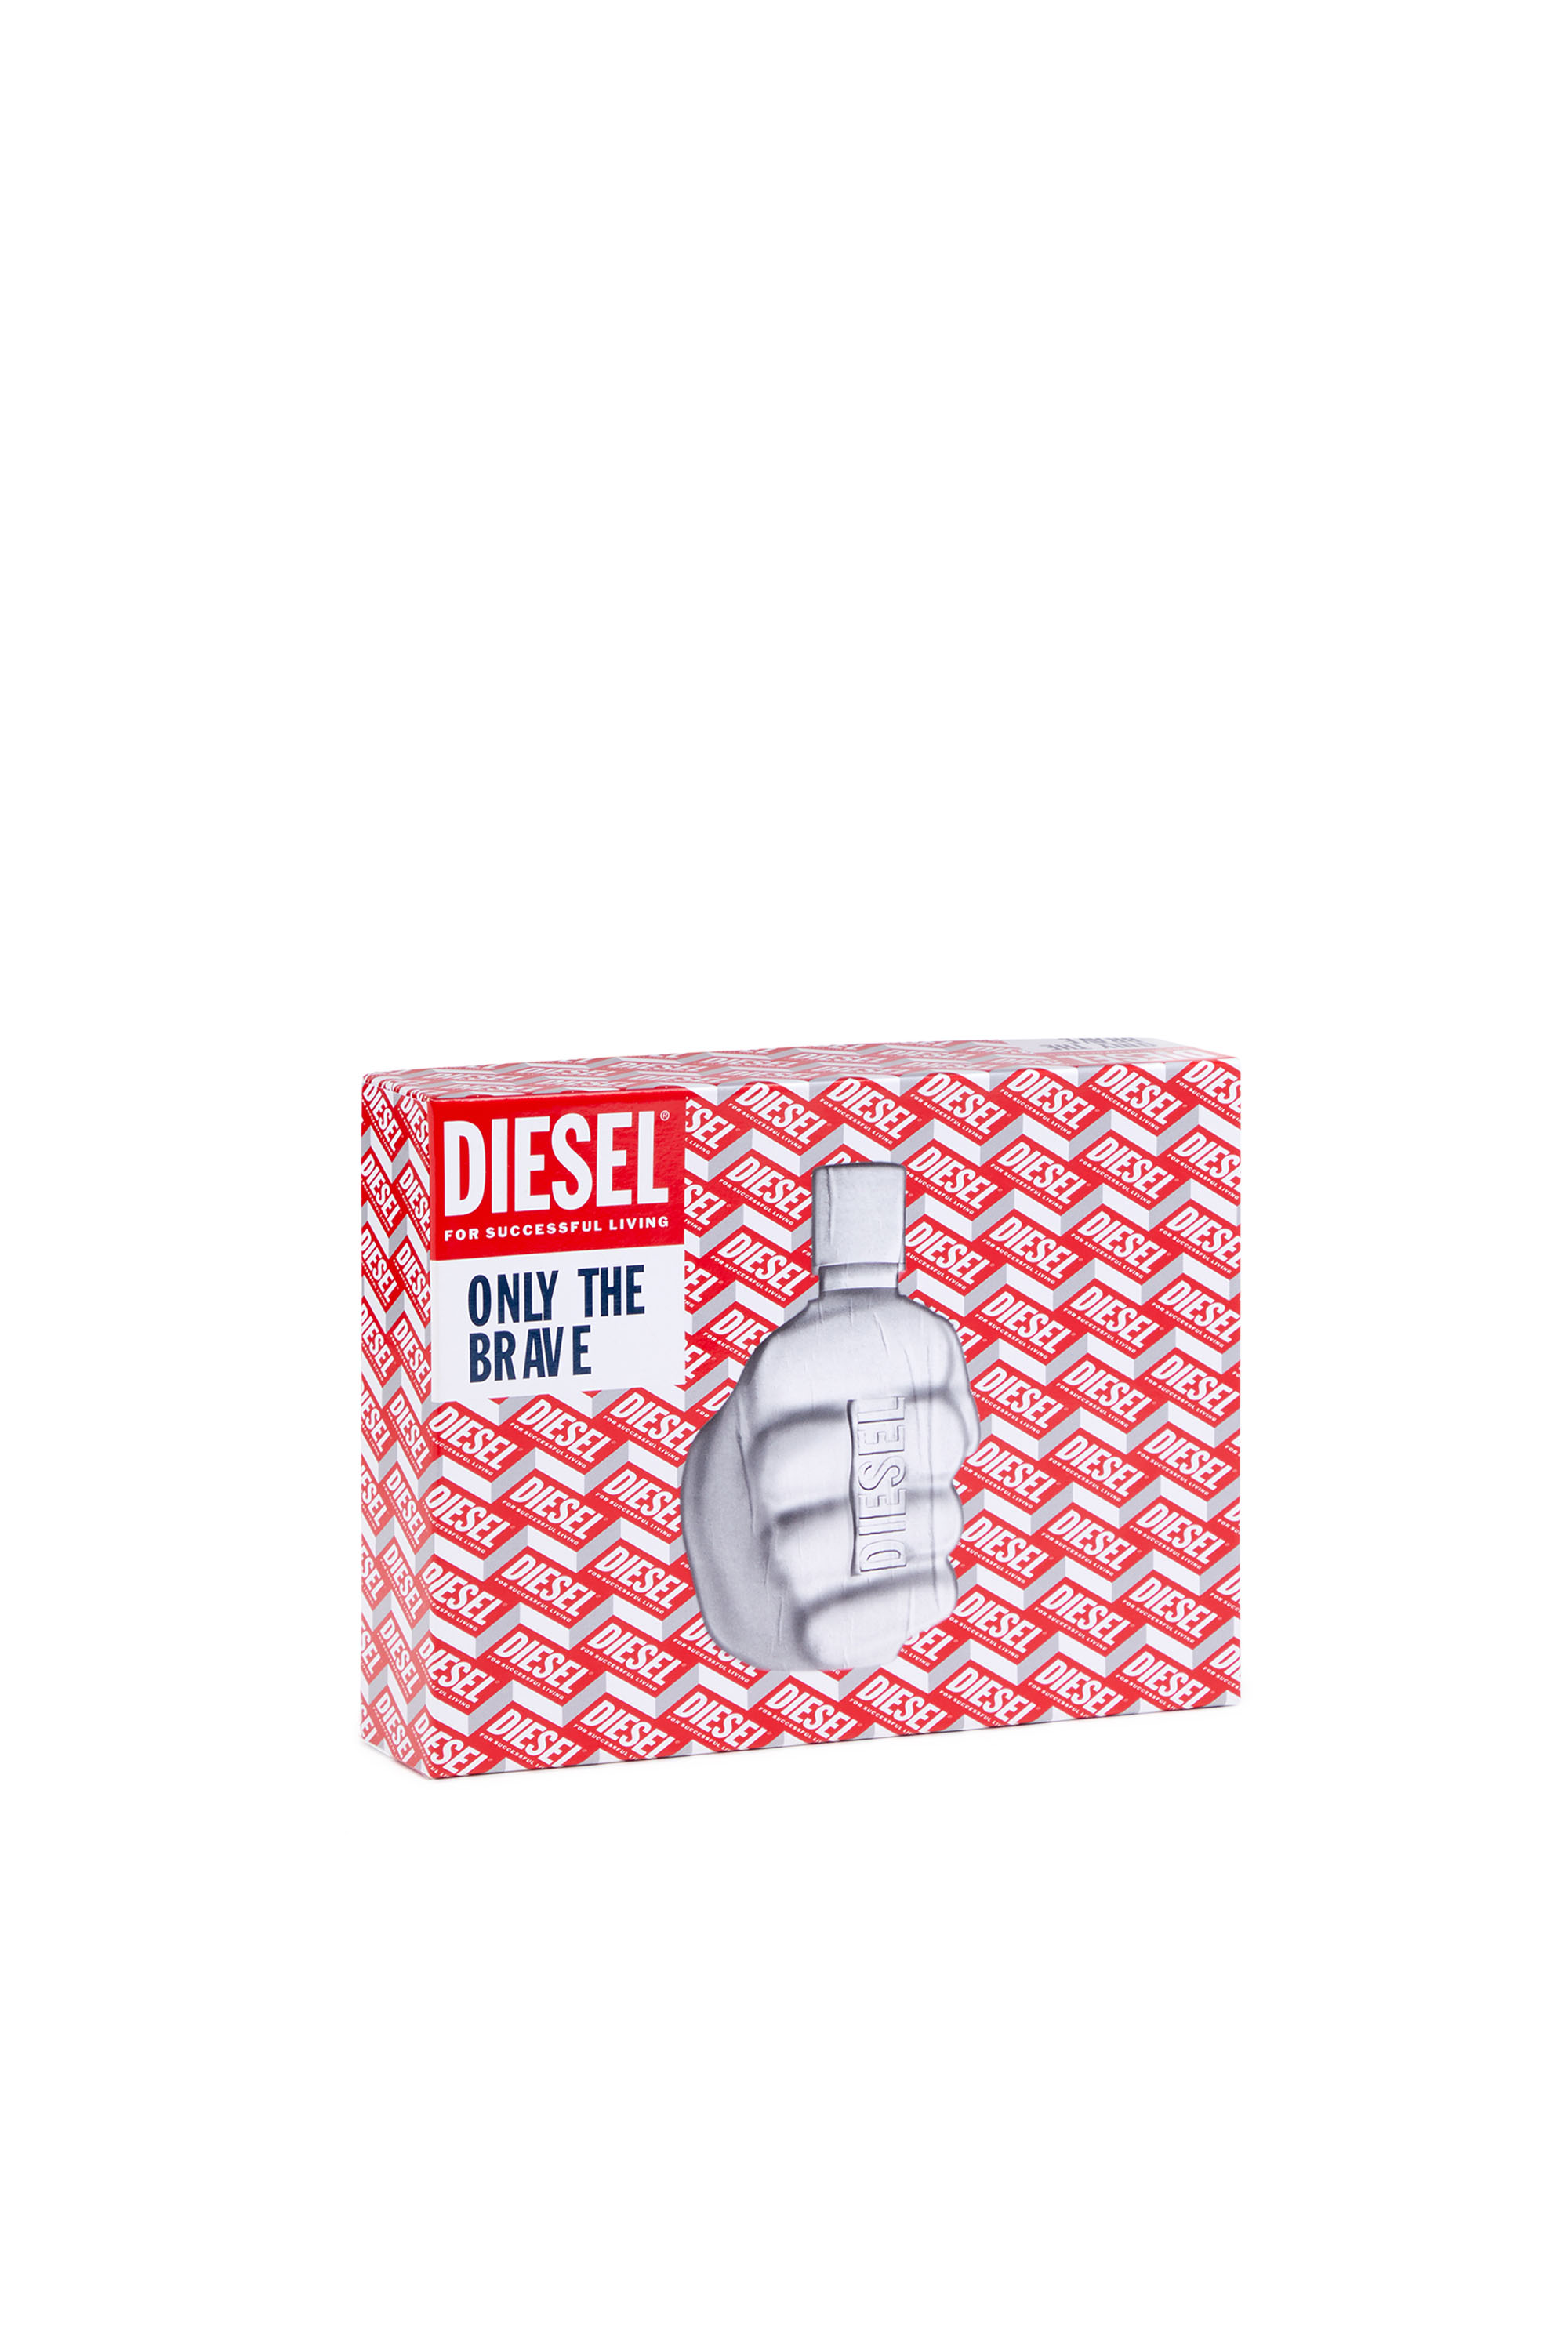 Diesel - ONLY THE BRAVE 50 ML  GIFT SET, Blue - Image 3